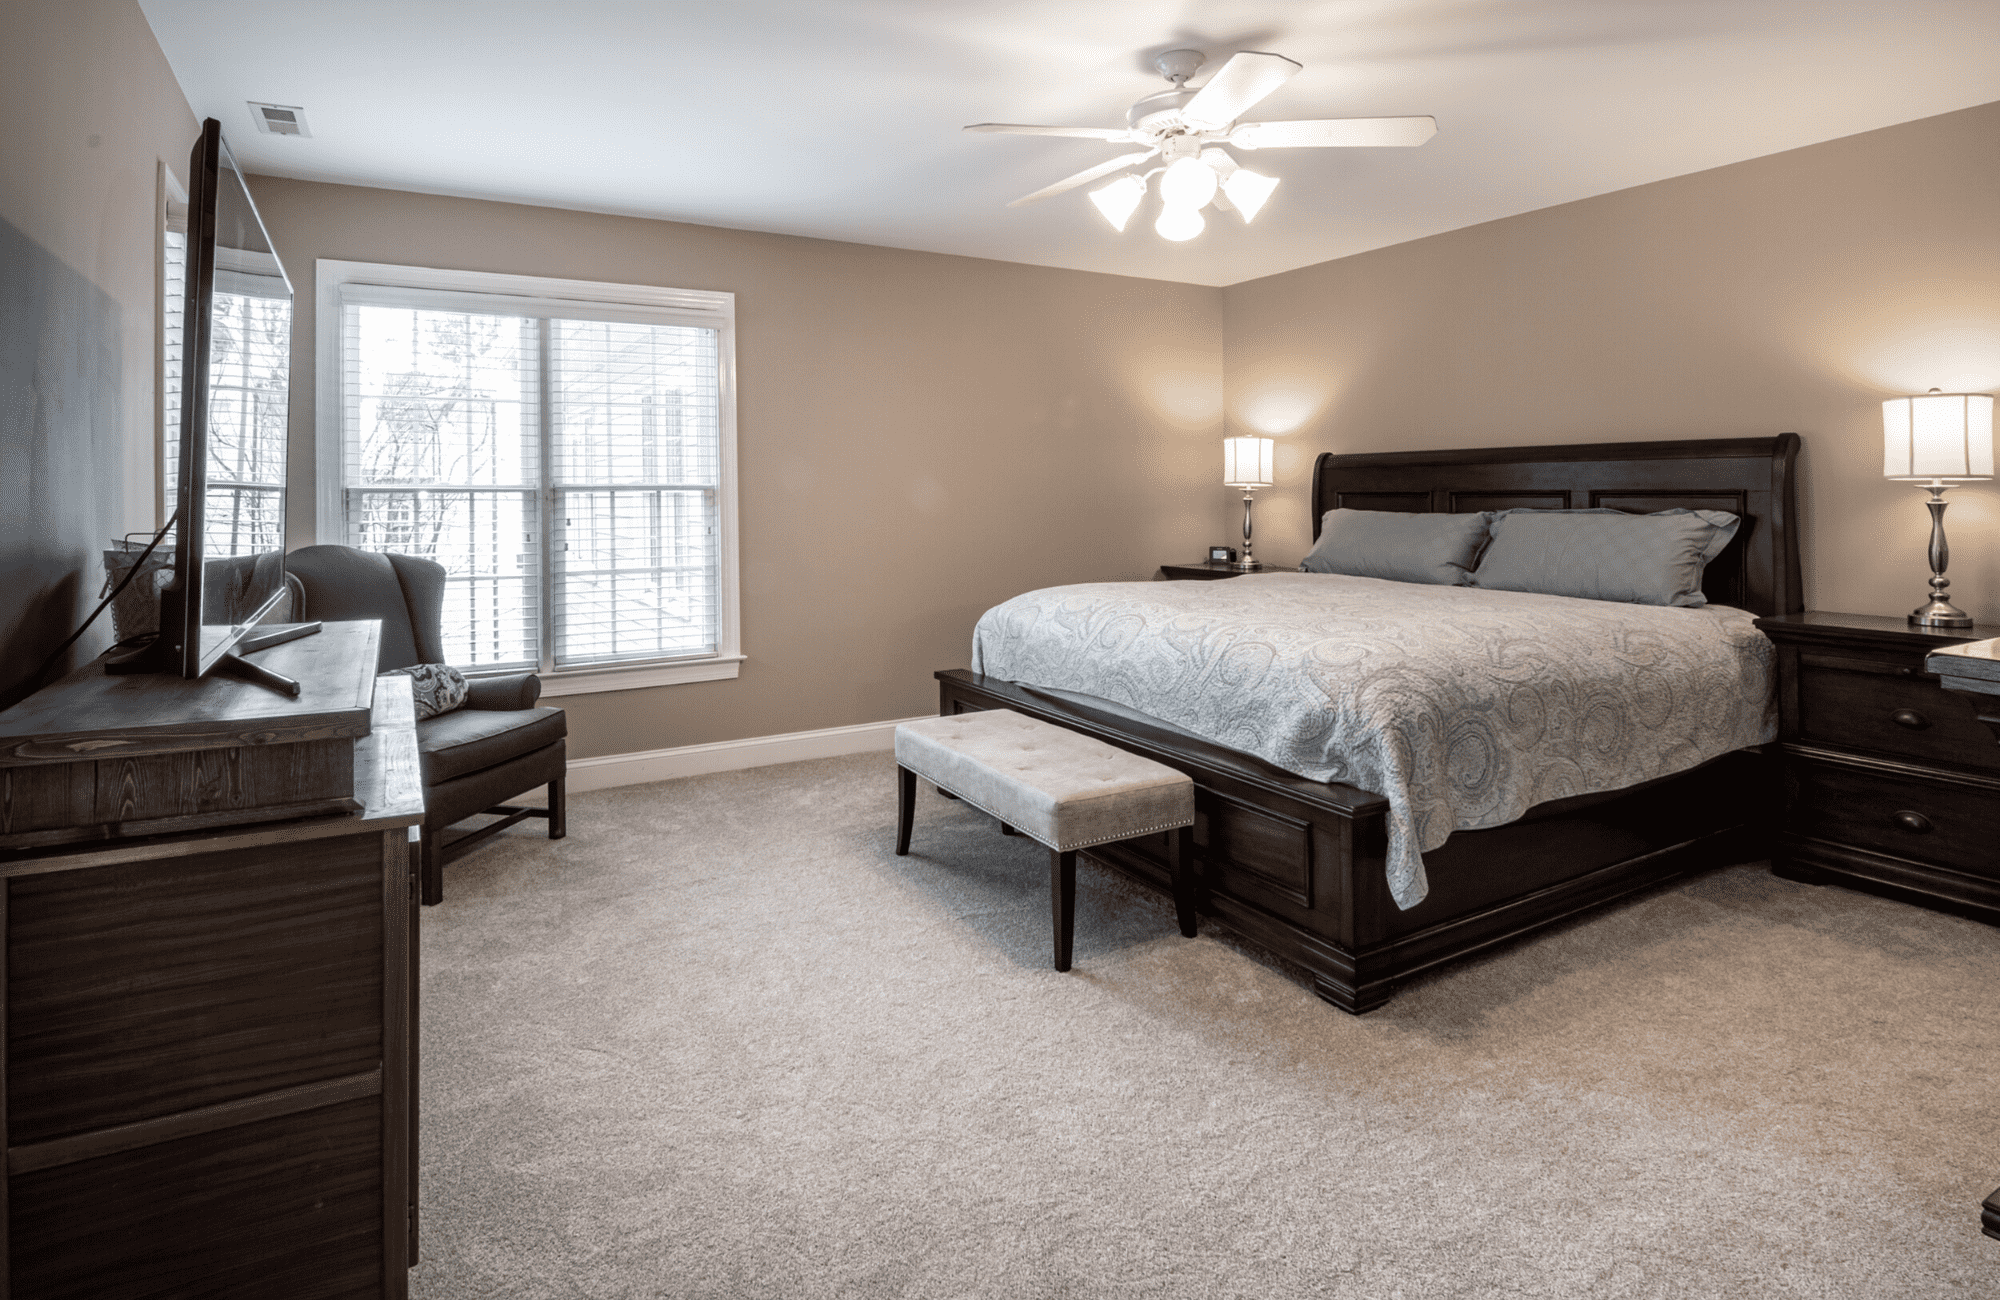 carpeted floor white bedroom from auburn flooring company